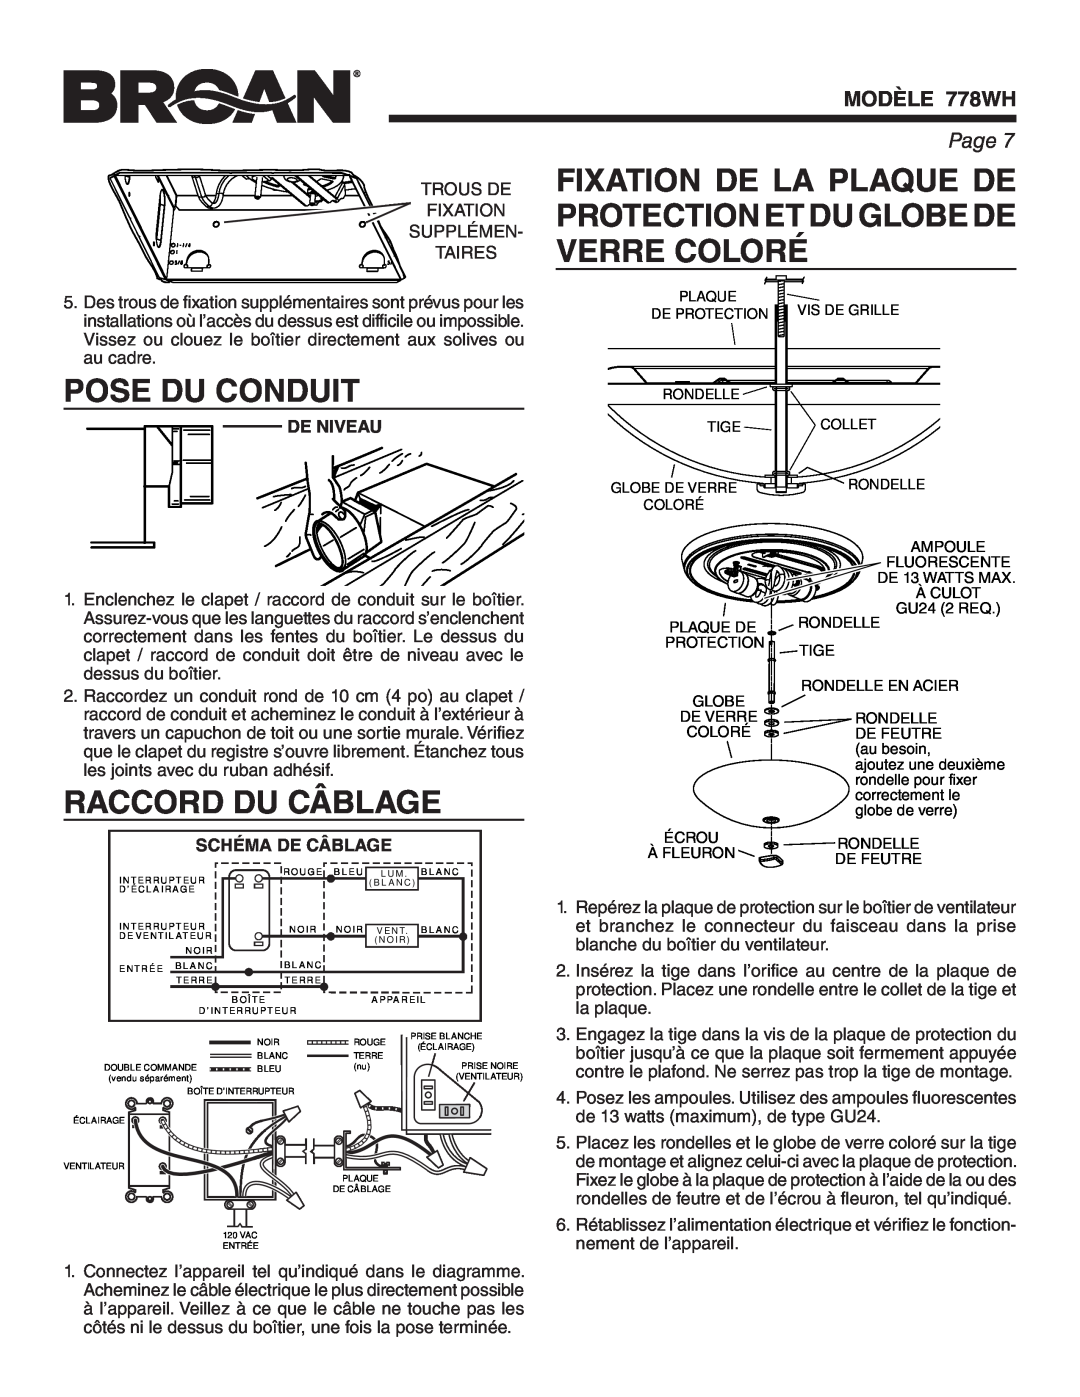 Broan warranty Pose Du Conduit, Raccord Du Câblage, De Niveau, Schéma De Câblage, MODÈLE 778WH, Page 